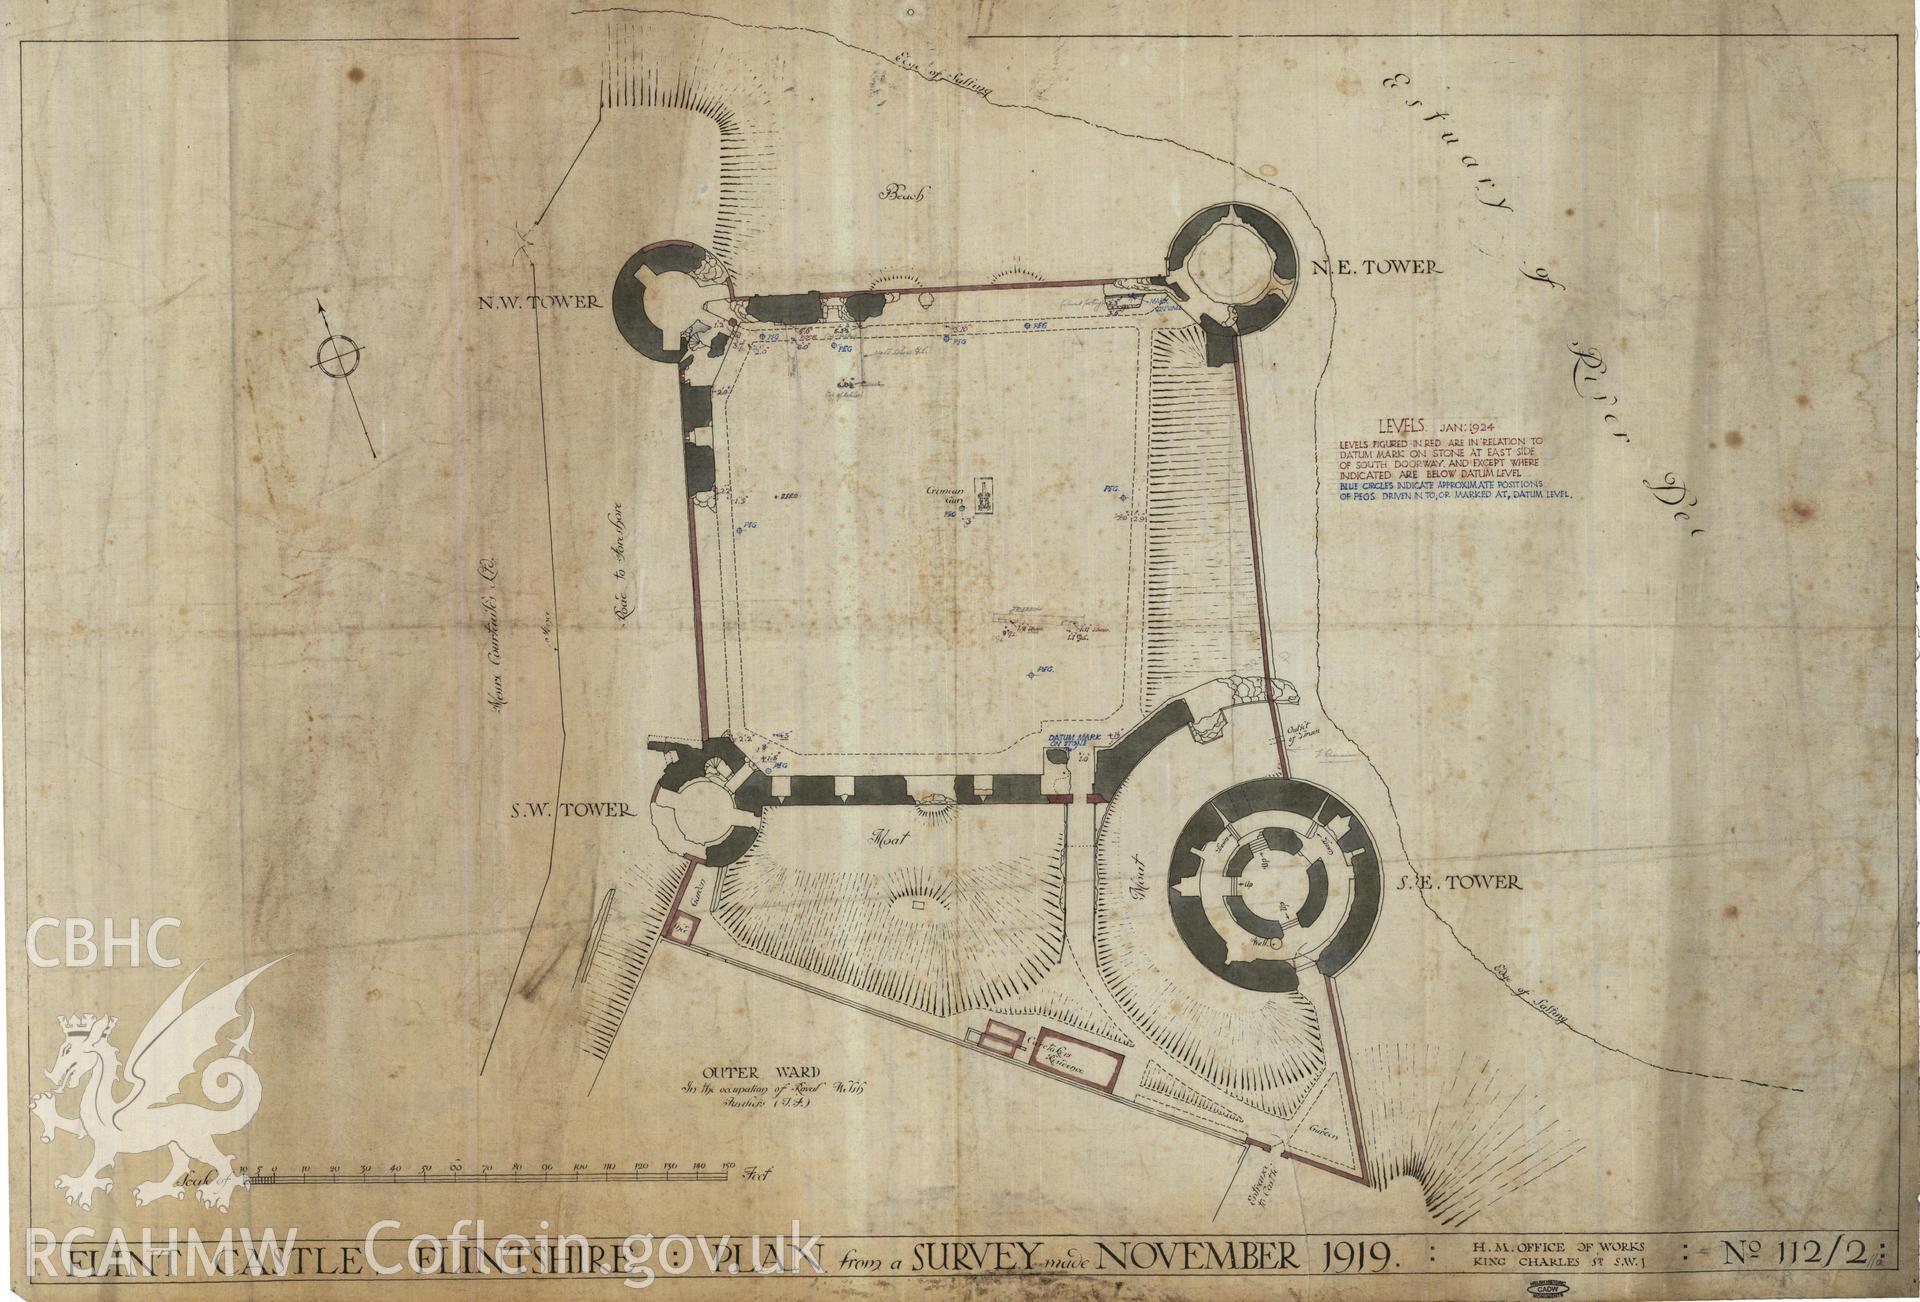 Cadw guardianship monument drawing of Flint Castle. General site plan. Cadw Ref. No. 112/2//a. Scale 1:192.